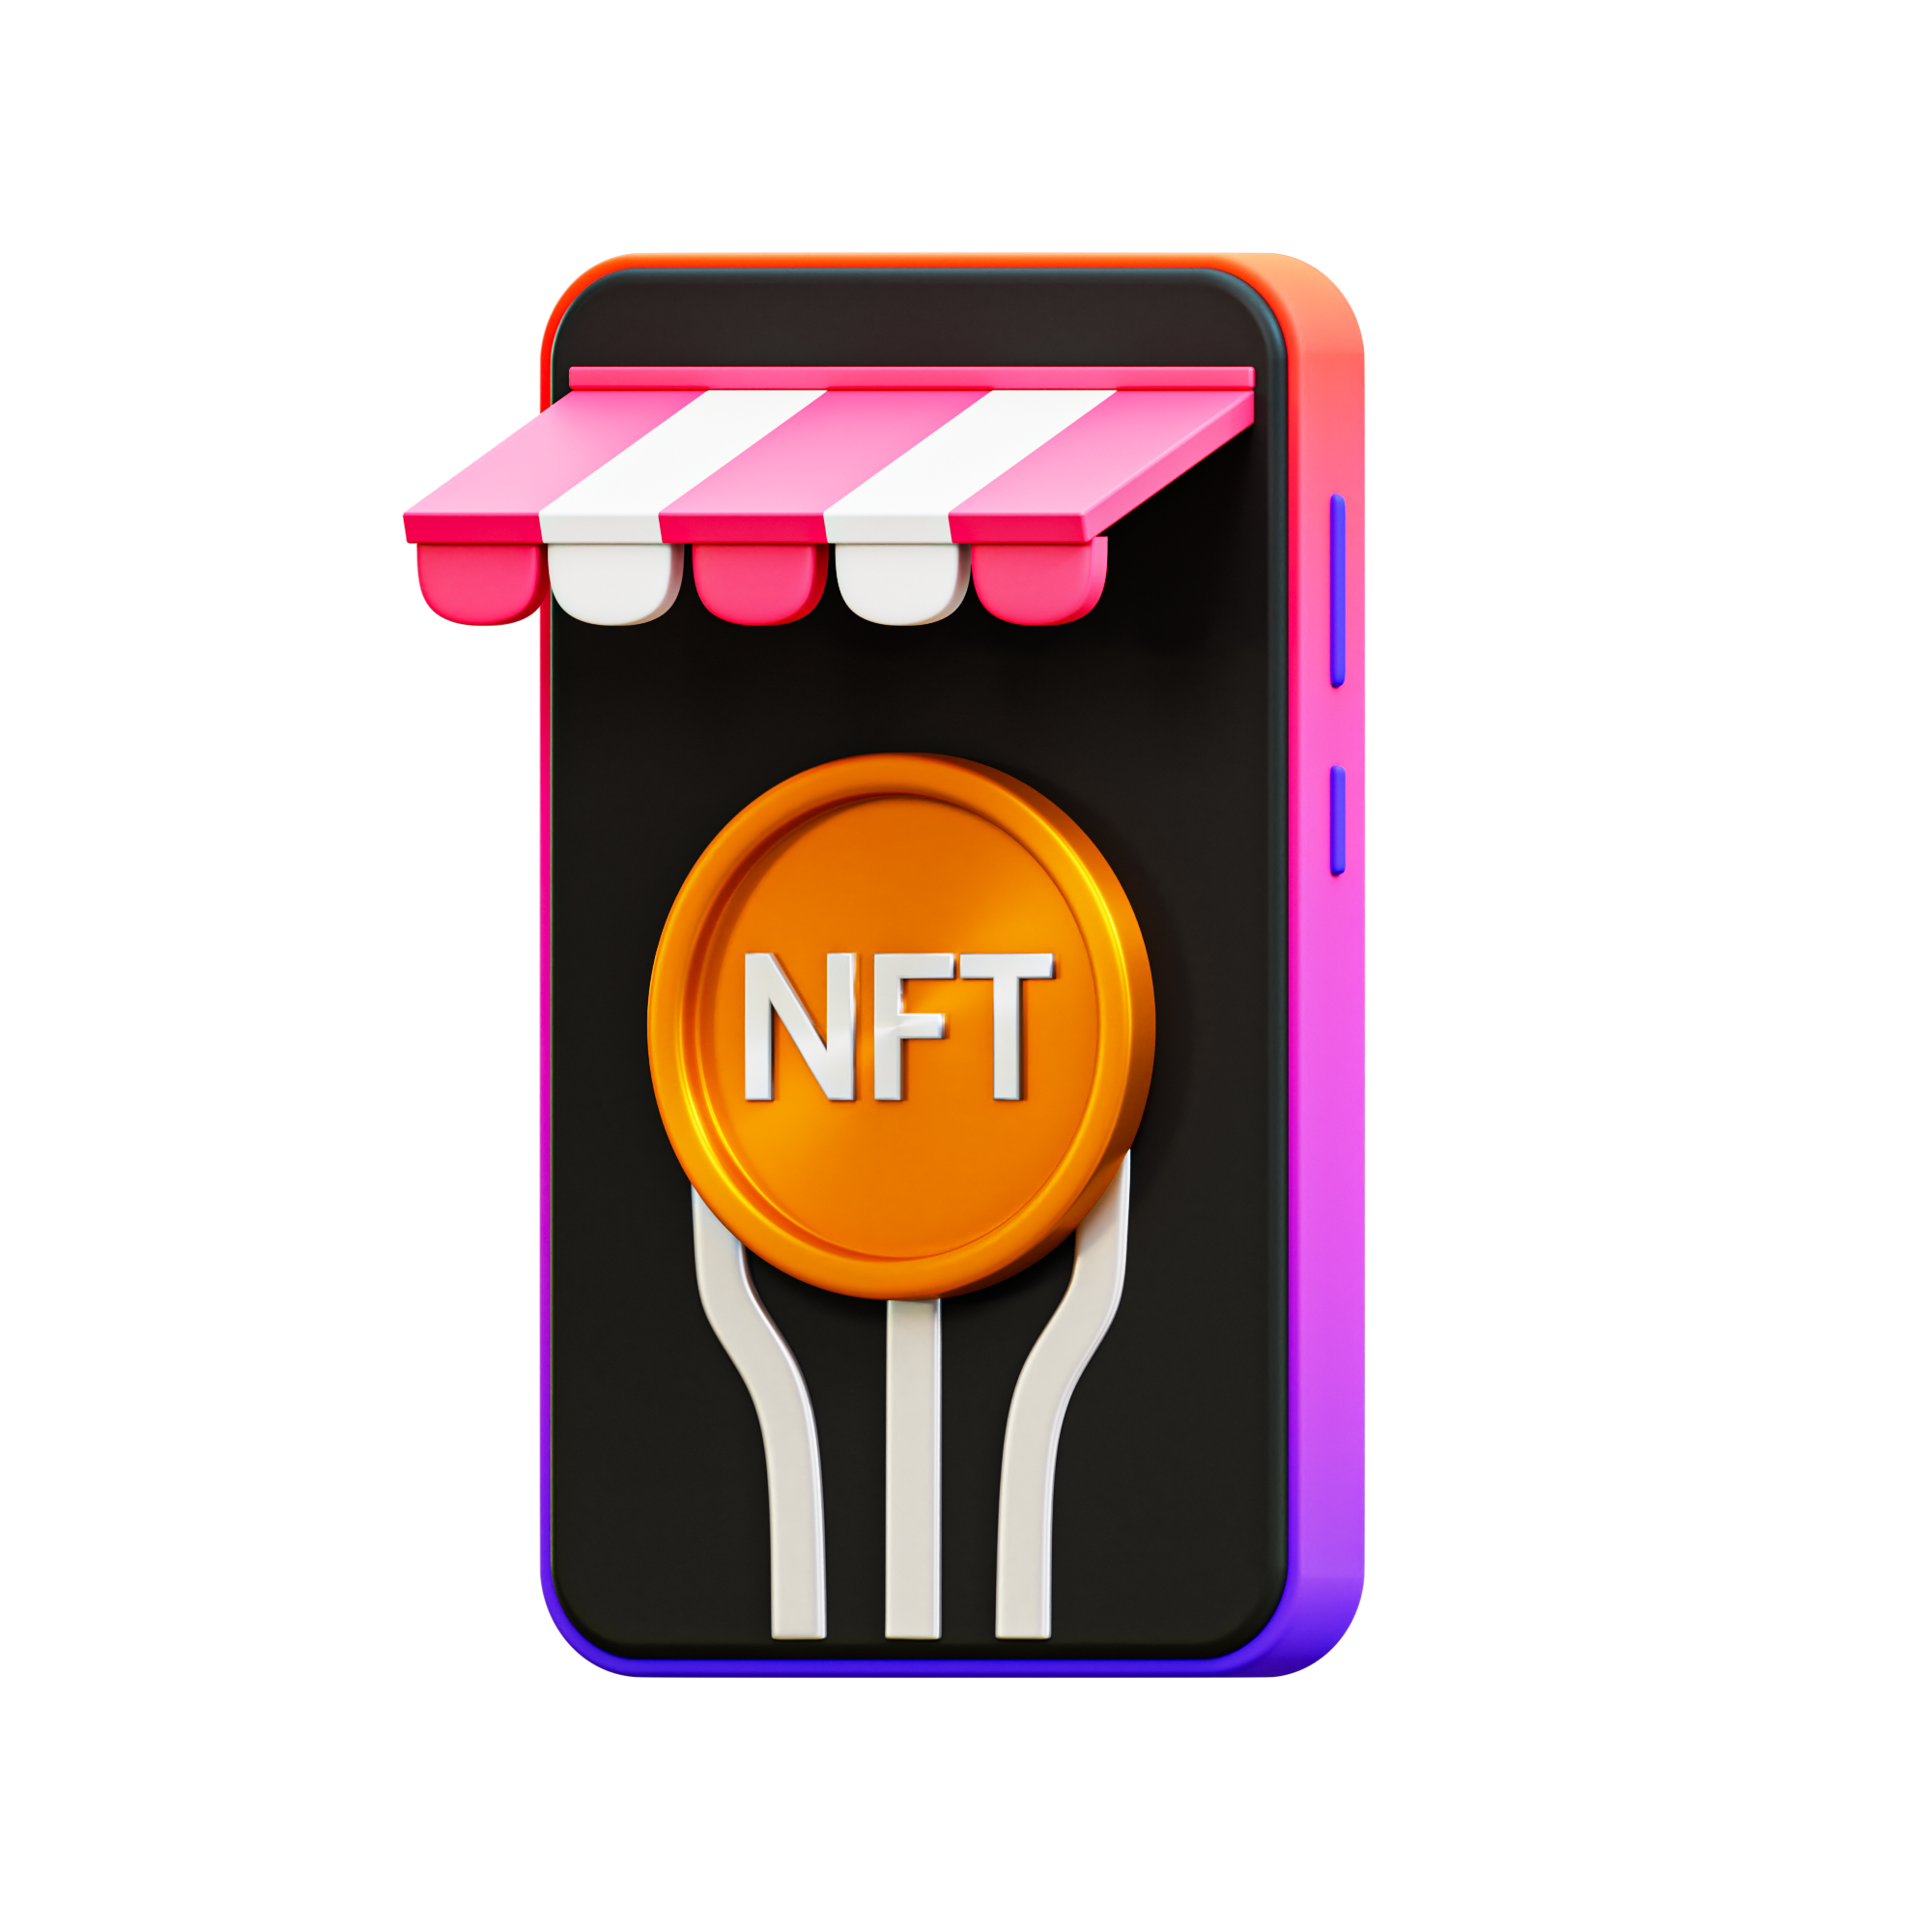 NFT Marketplace